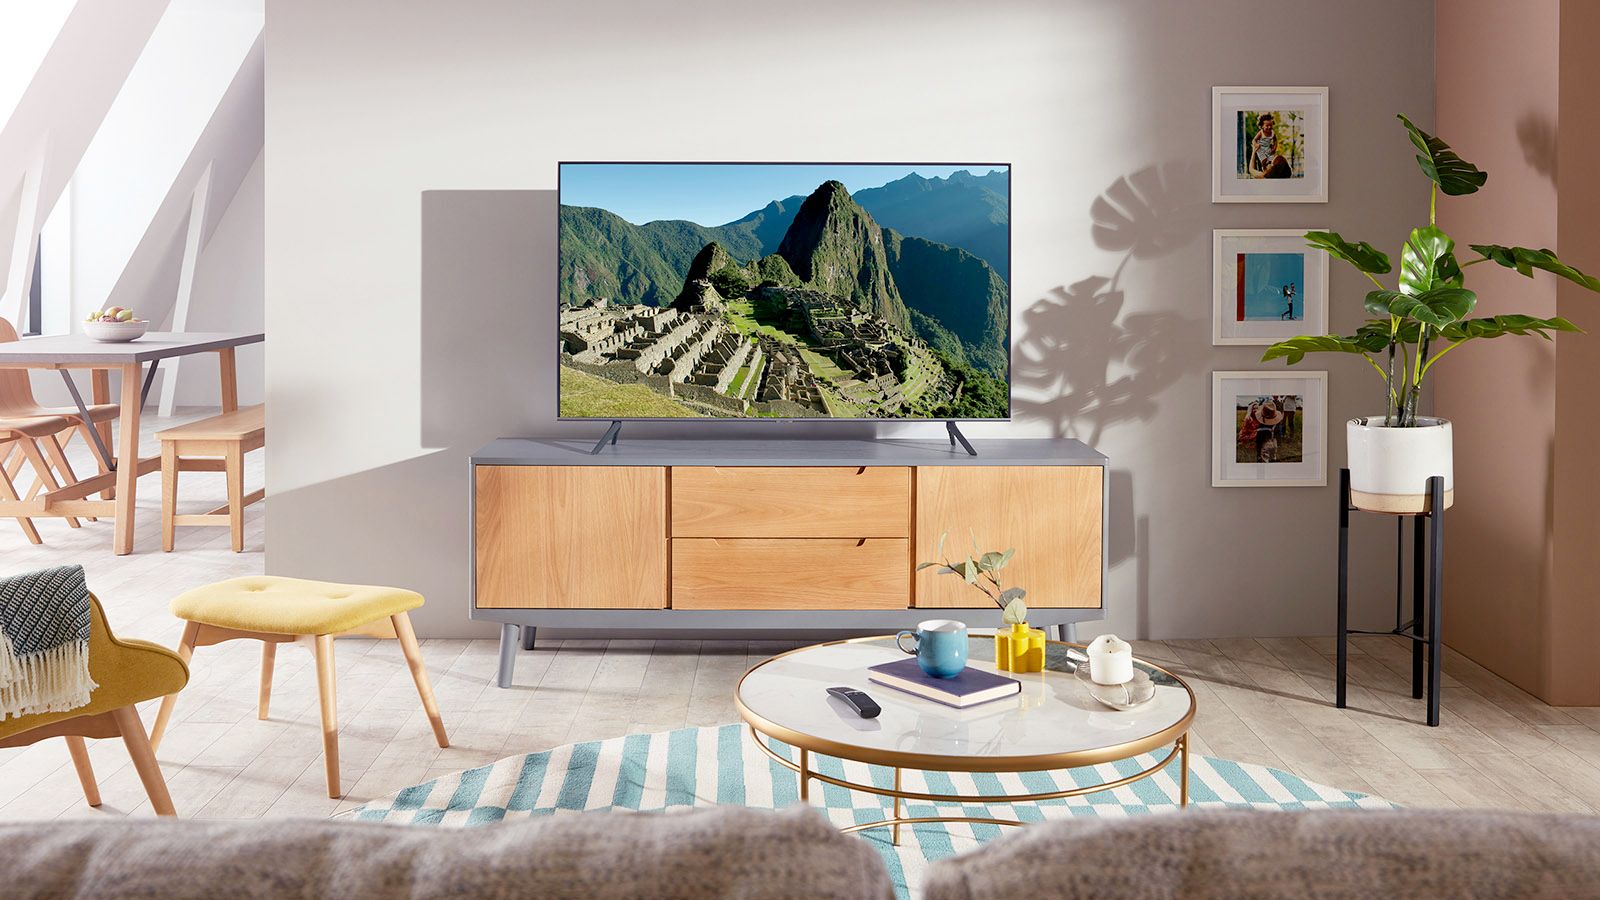 Samsung Q65T 4K QLED TV review image 1